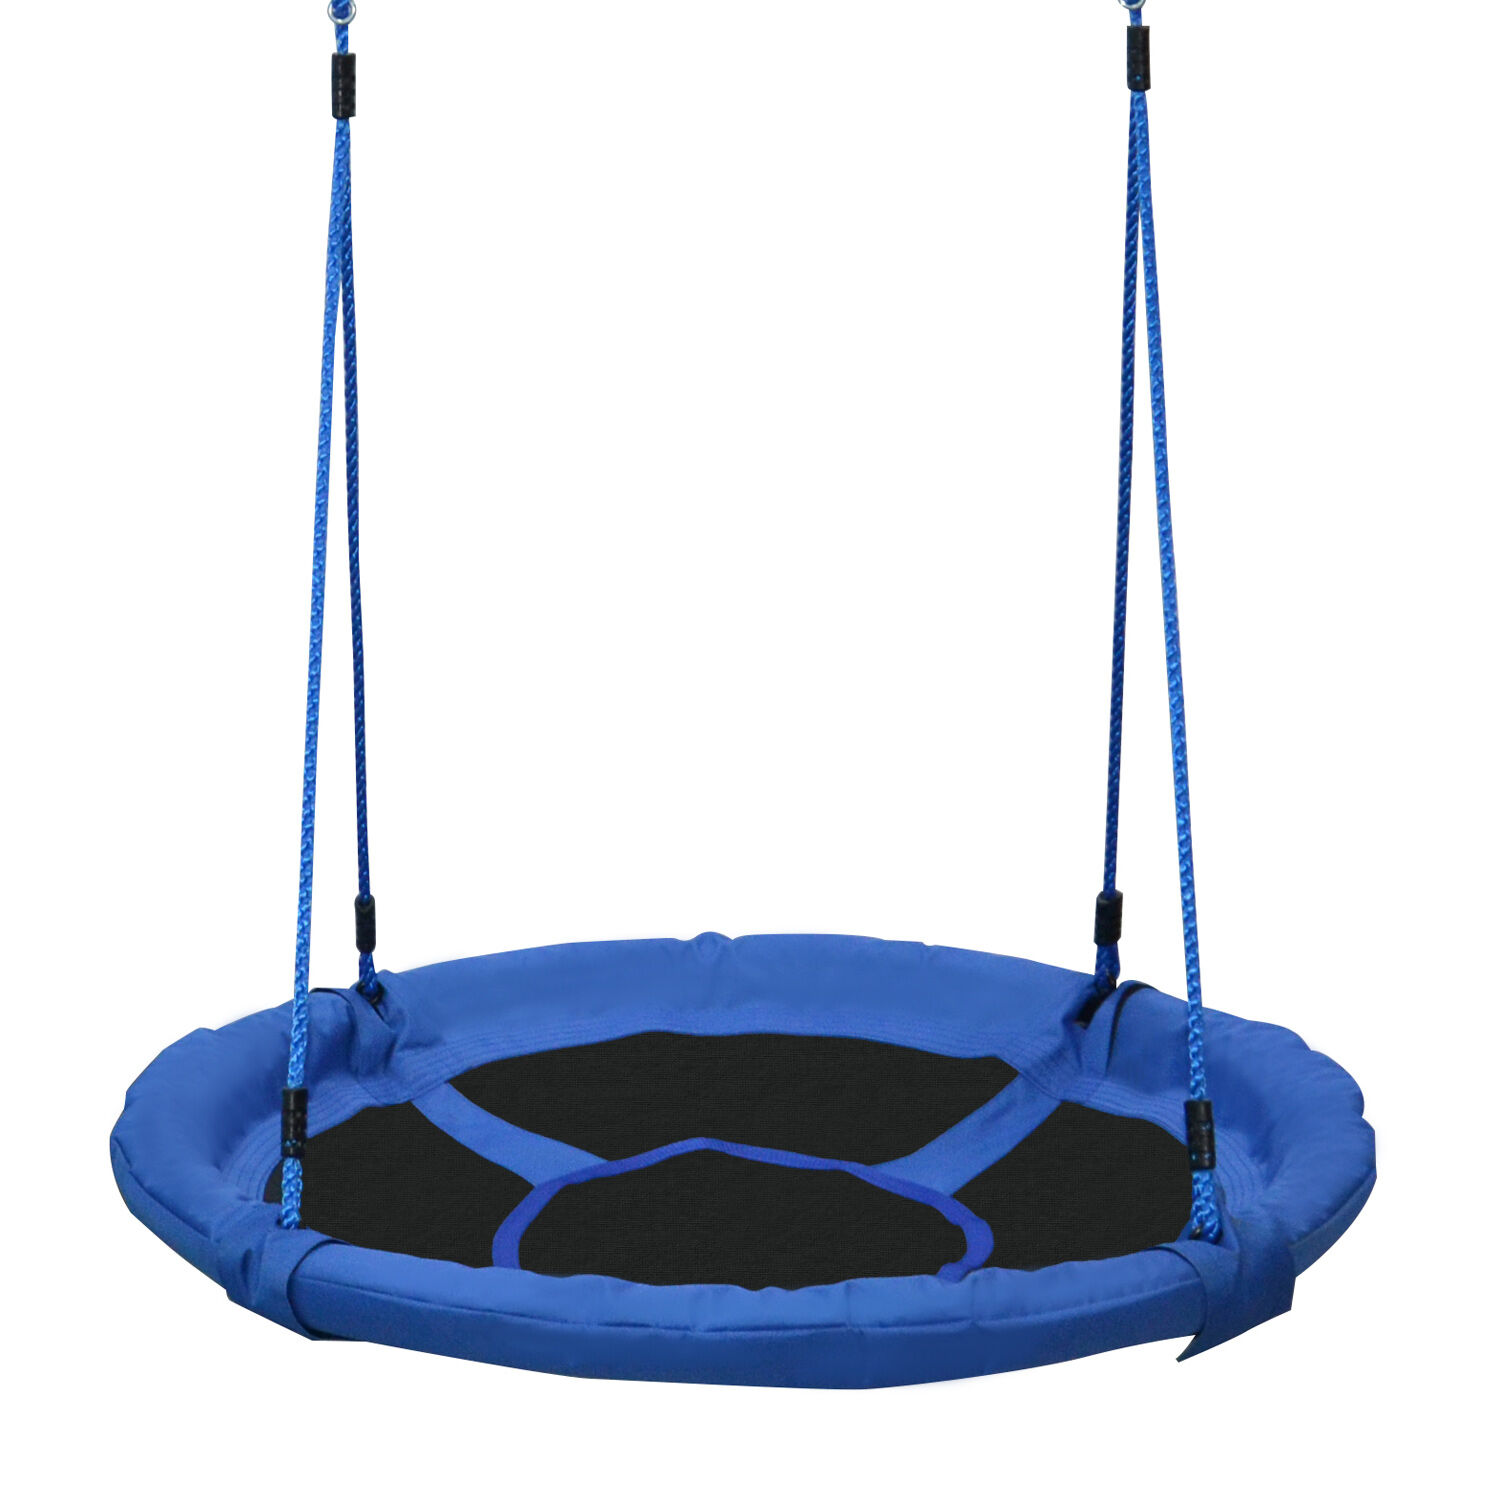 HOMCOM 40 Inch / 100 cm Tree Swing Round Kids Nest Swing Seat for Outdoor Backyard Garden Play Activity Blue